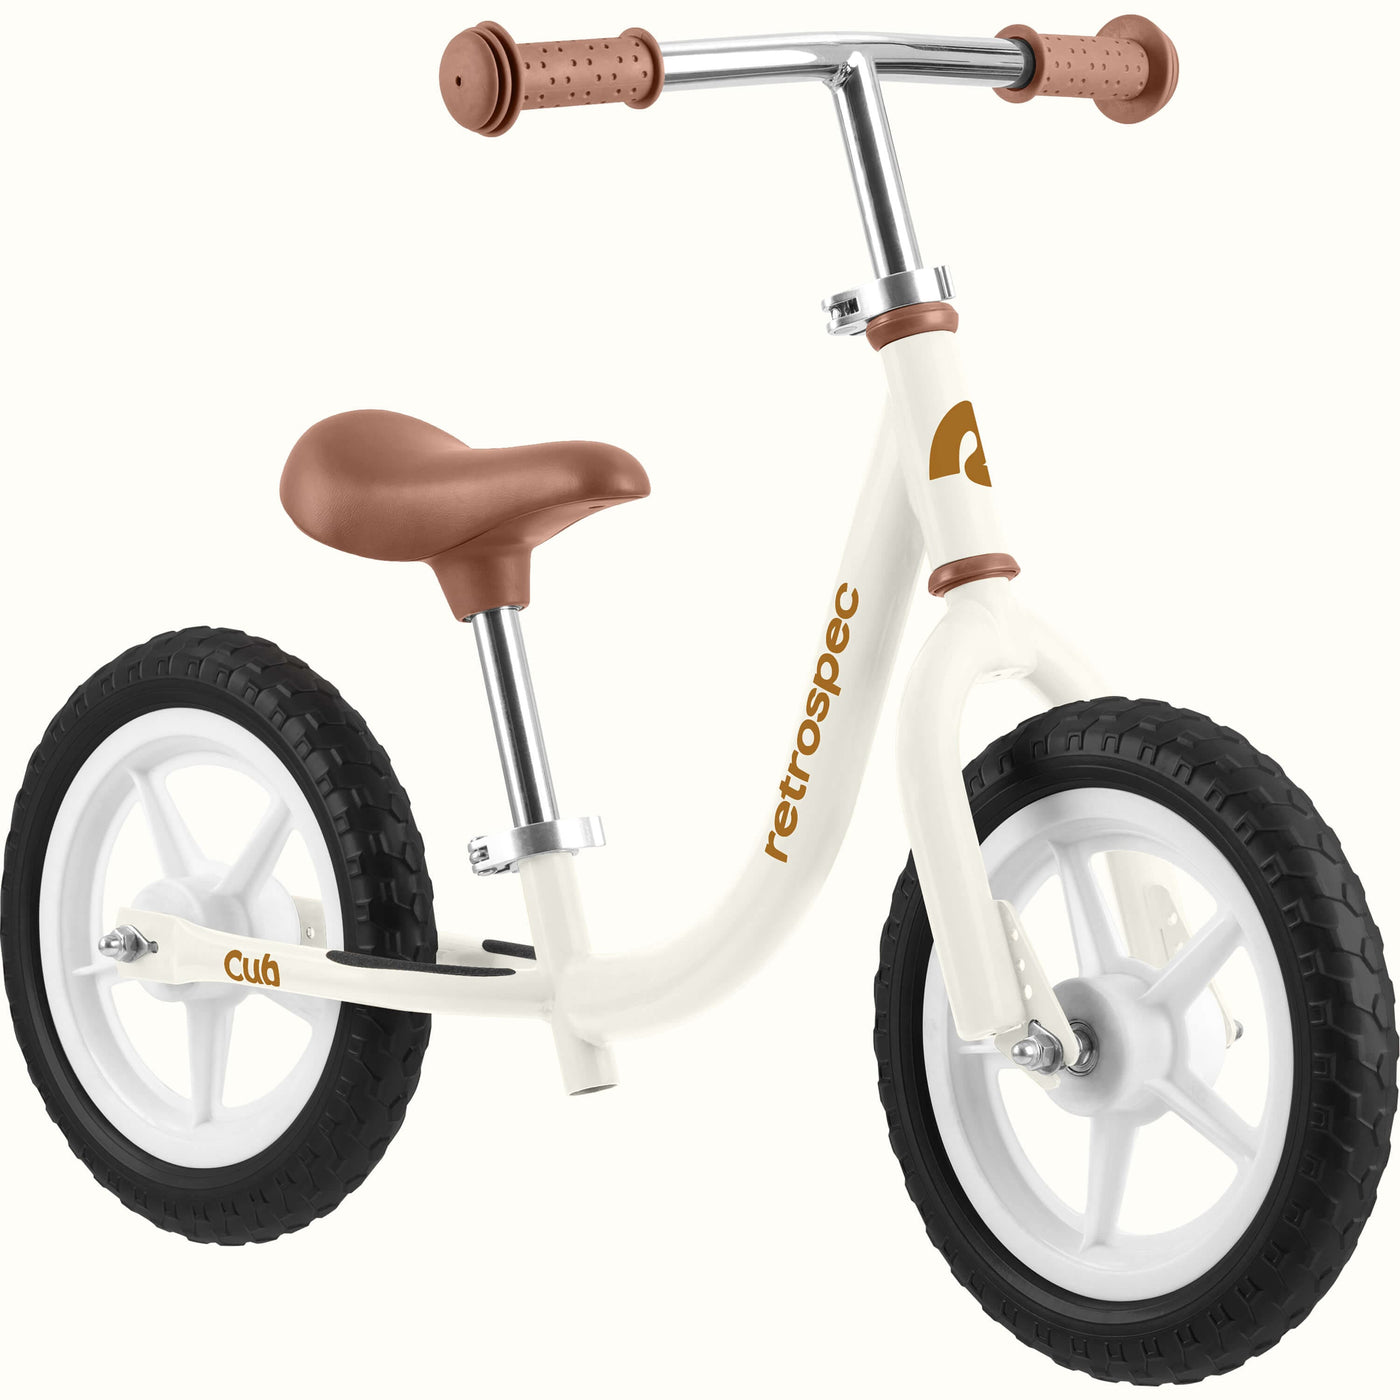 Cub 2 Kids’ Balance Bike (18 months-4 years) | Eggshell